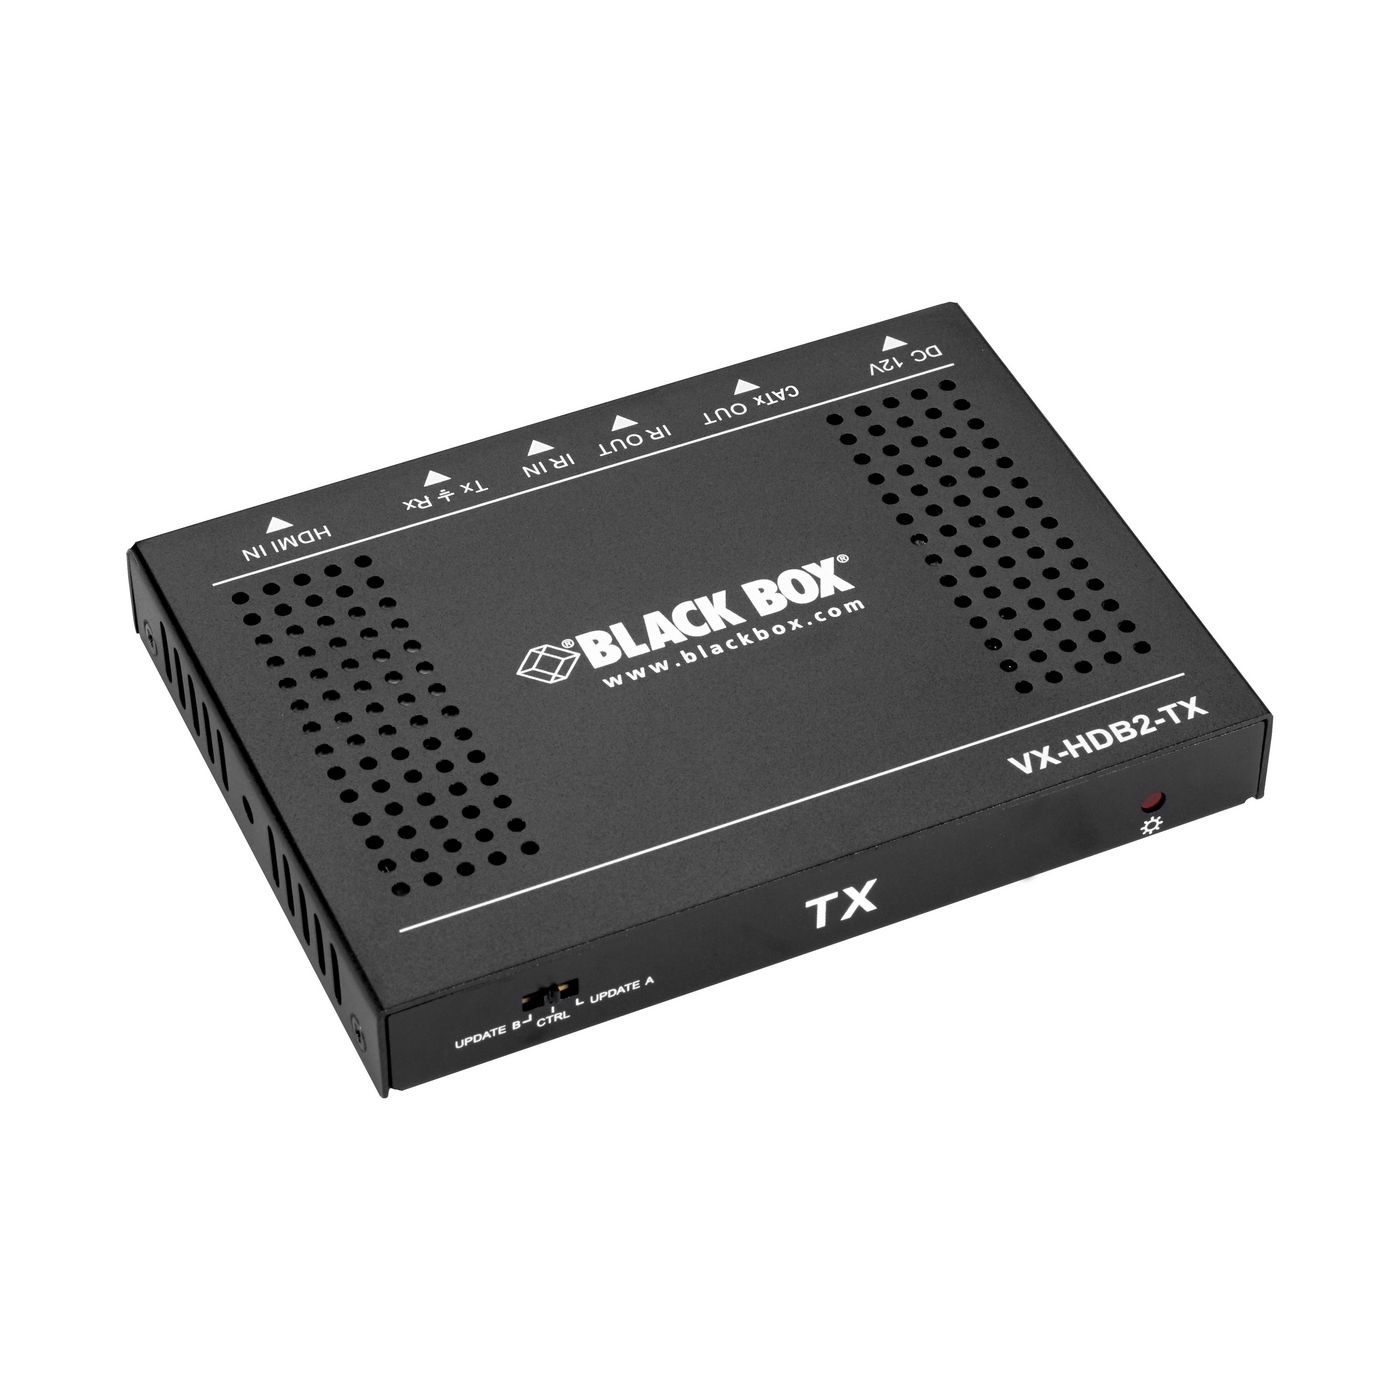 Black-Box VX-HDB2-TX W126135711 HDMI 2.0 4K 60Hz 4:4:4 VIDEO 